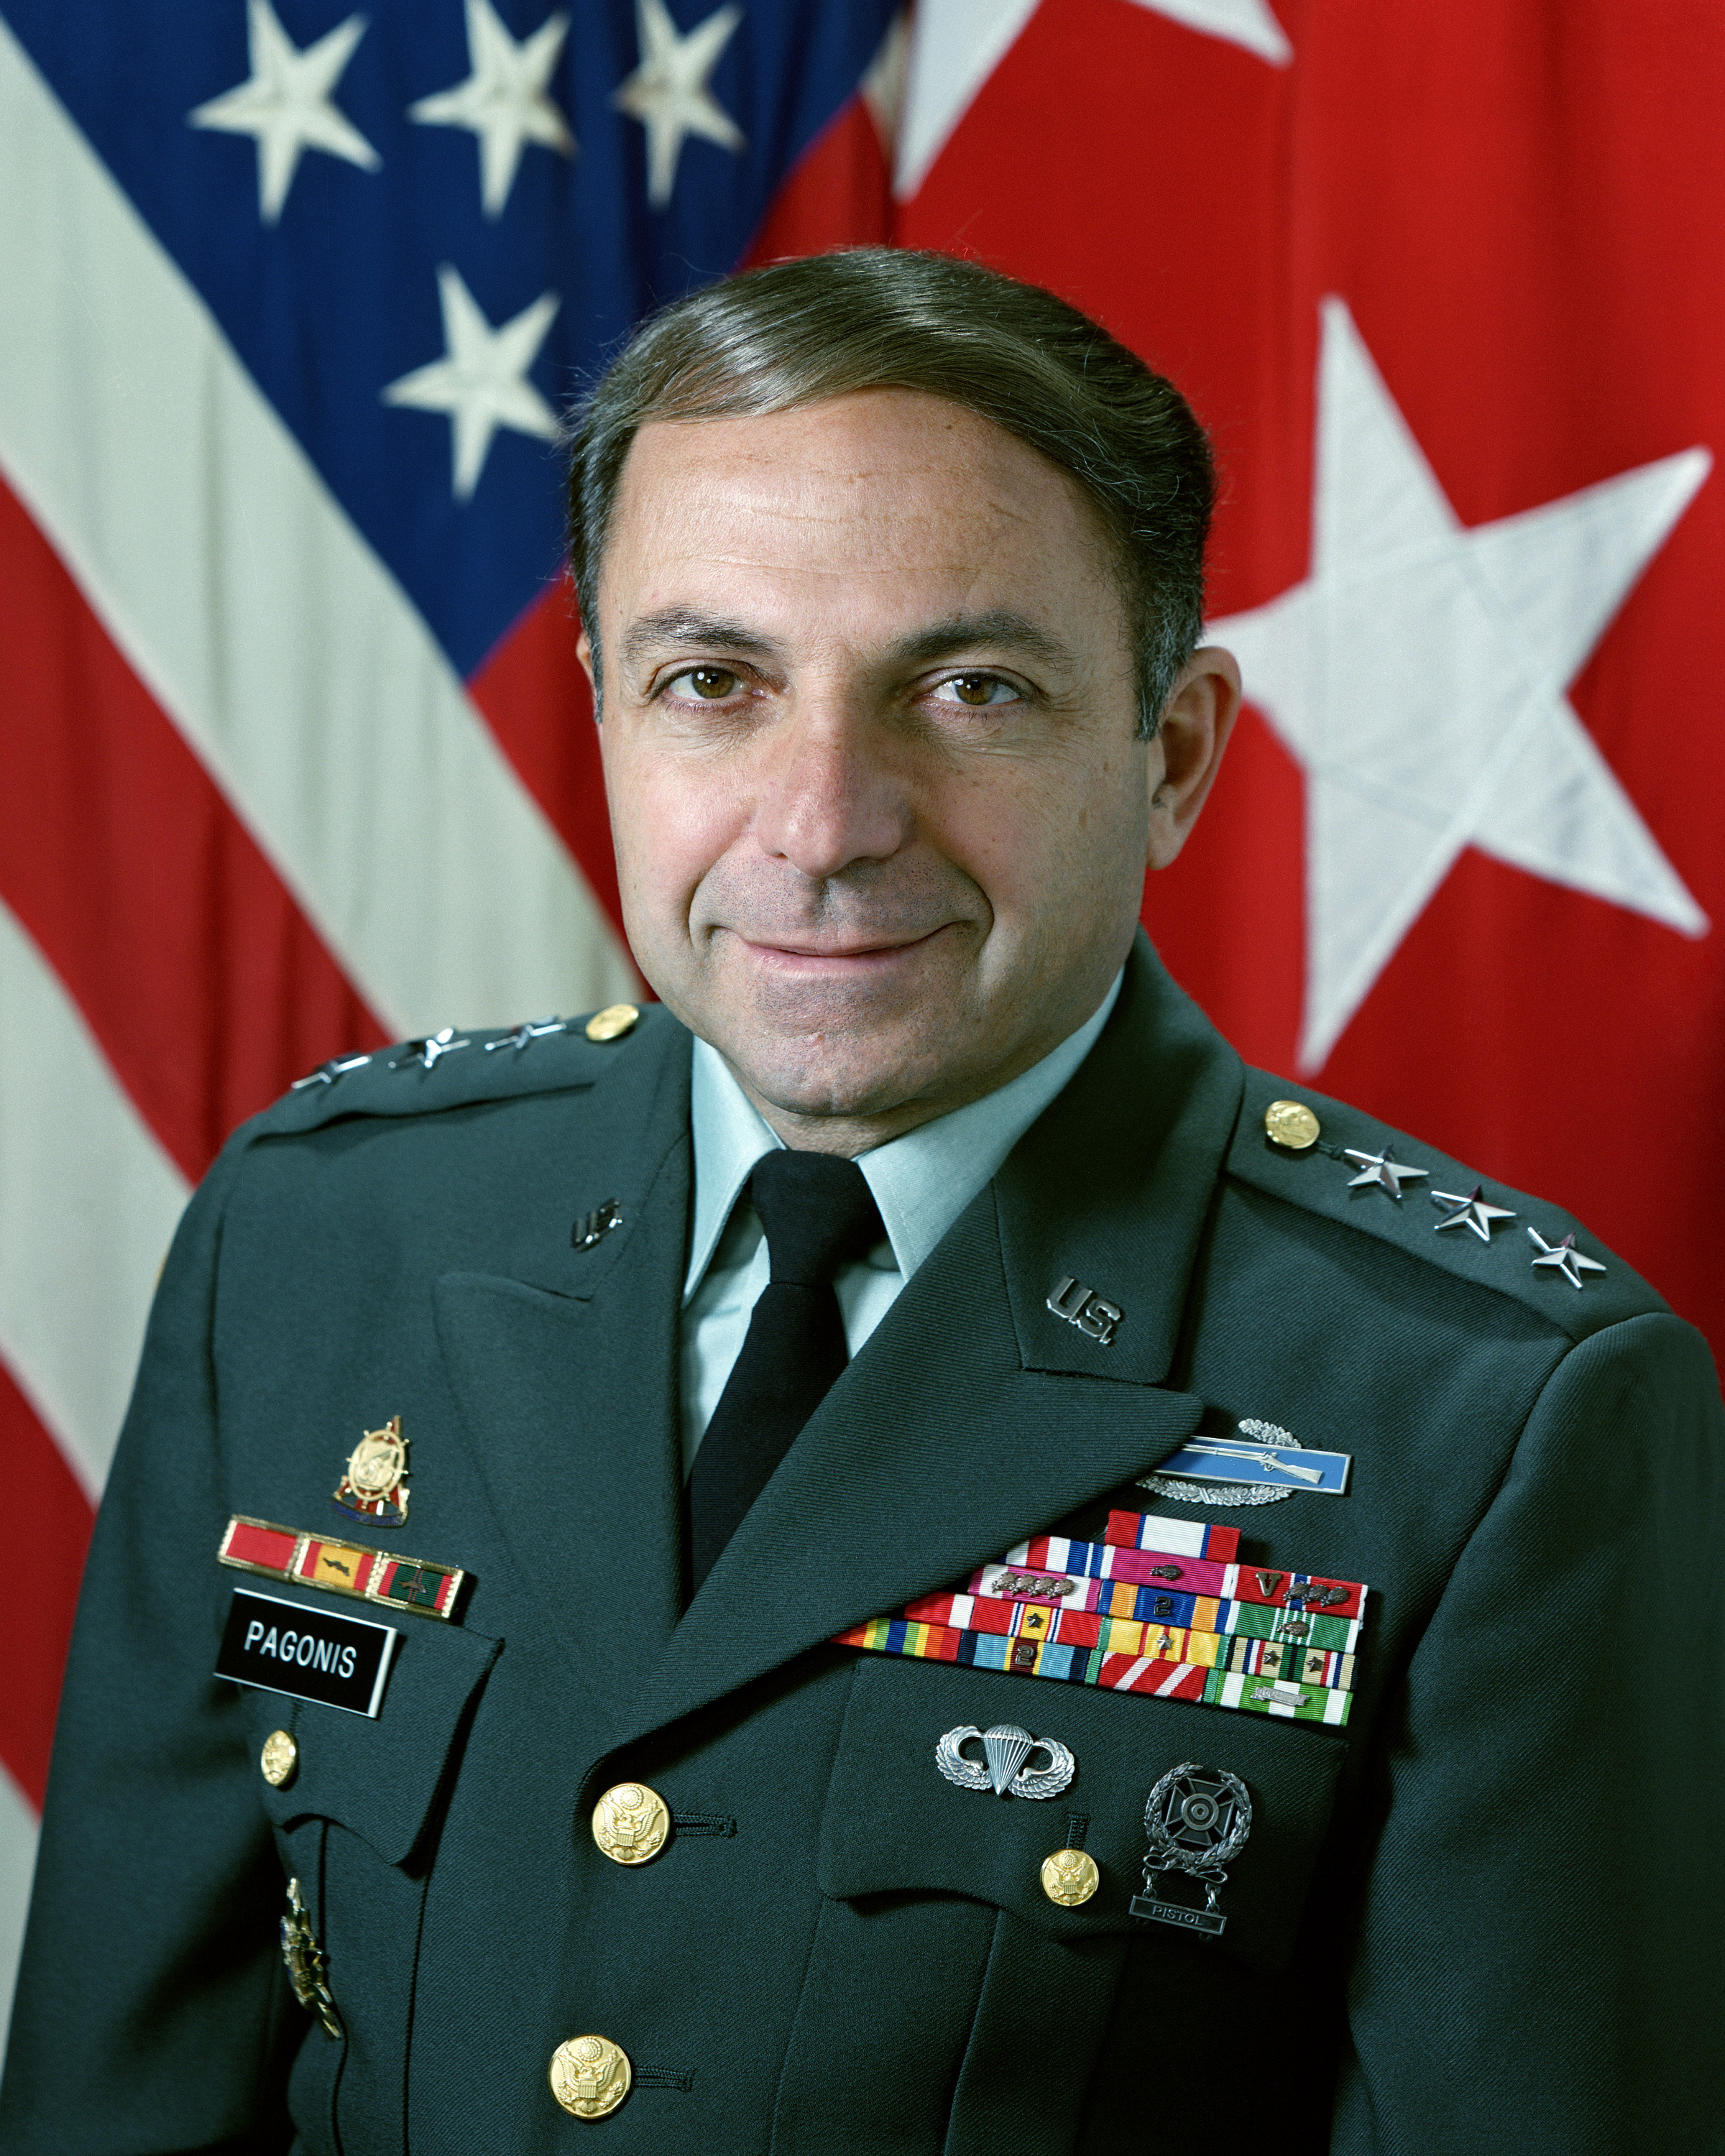 General William Pagonis